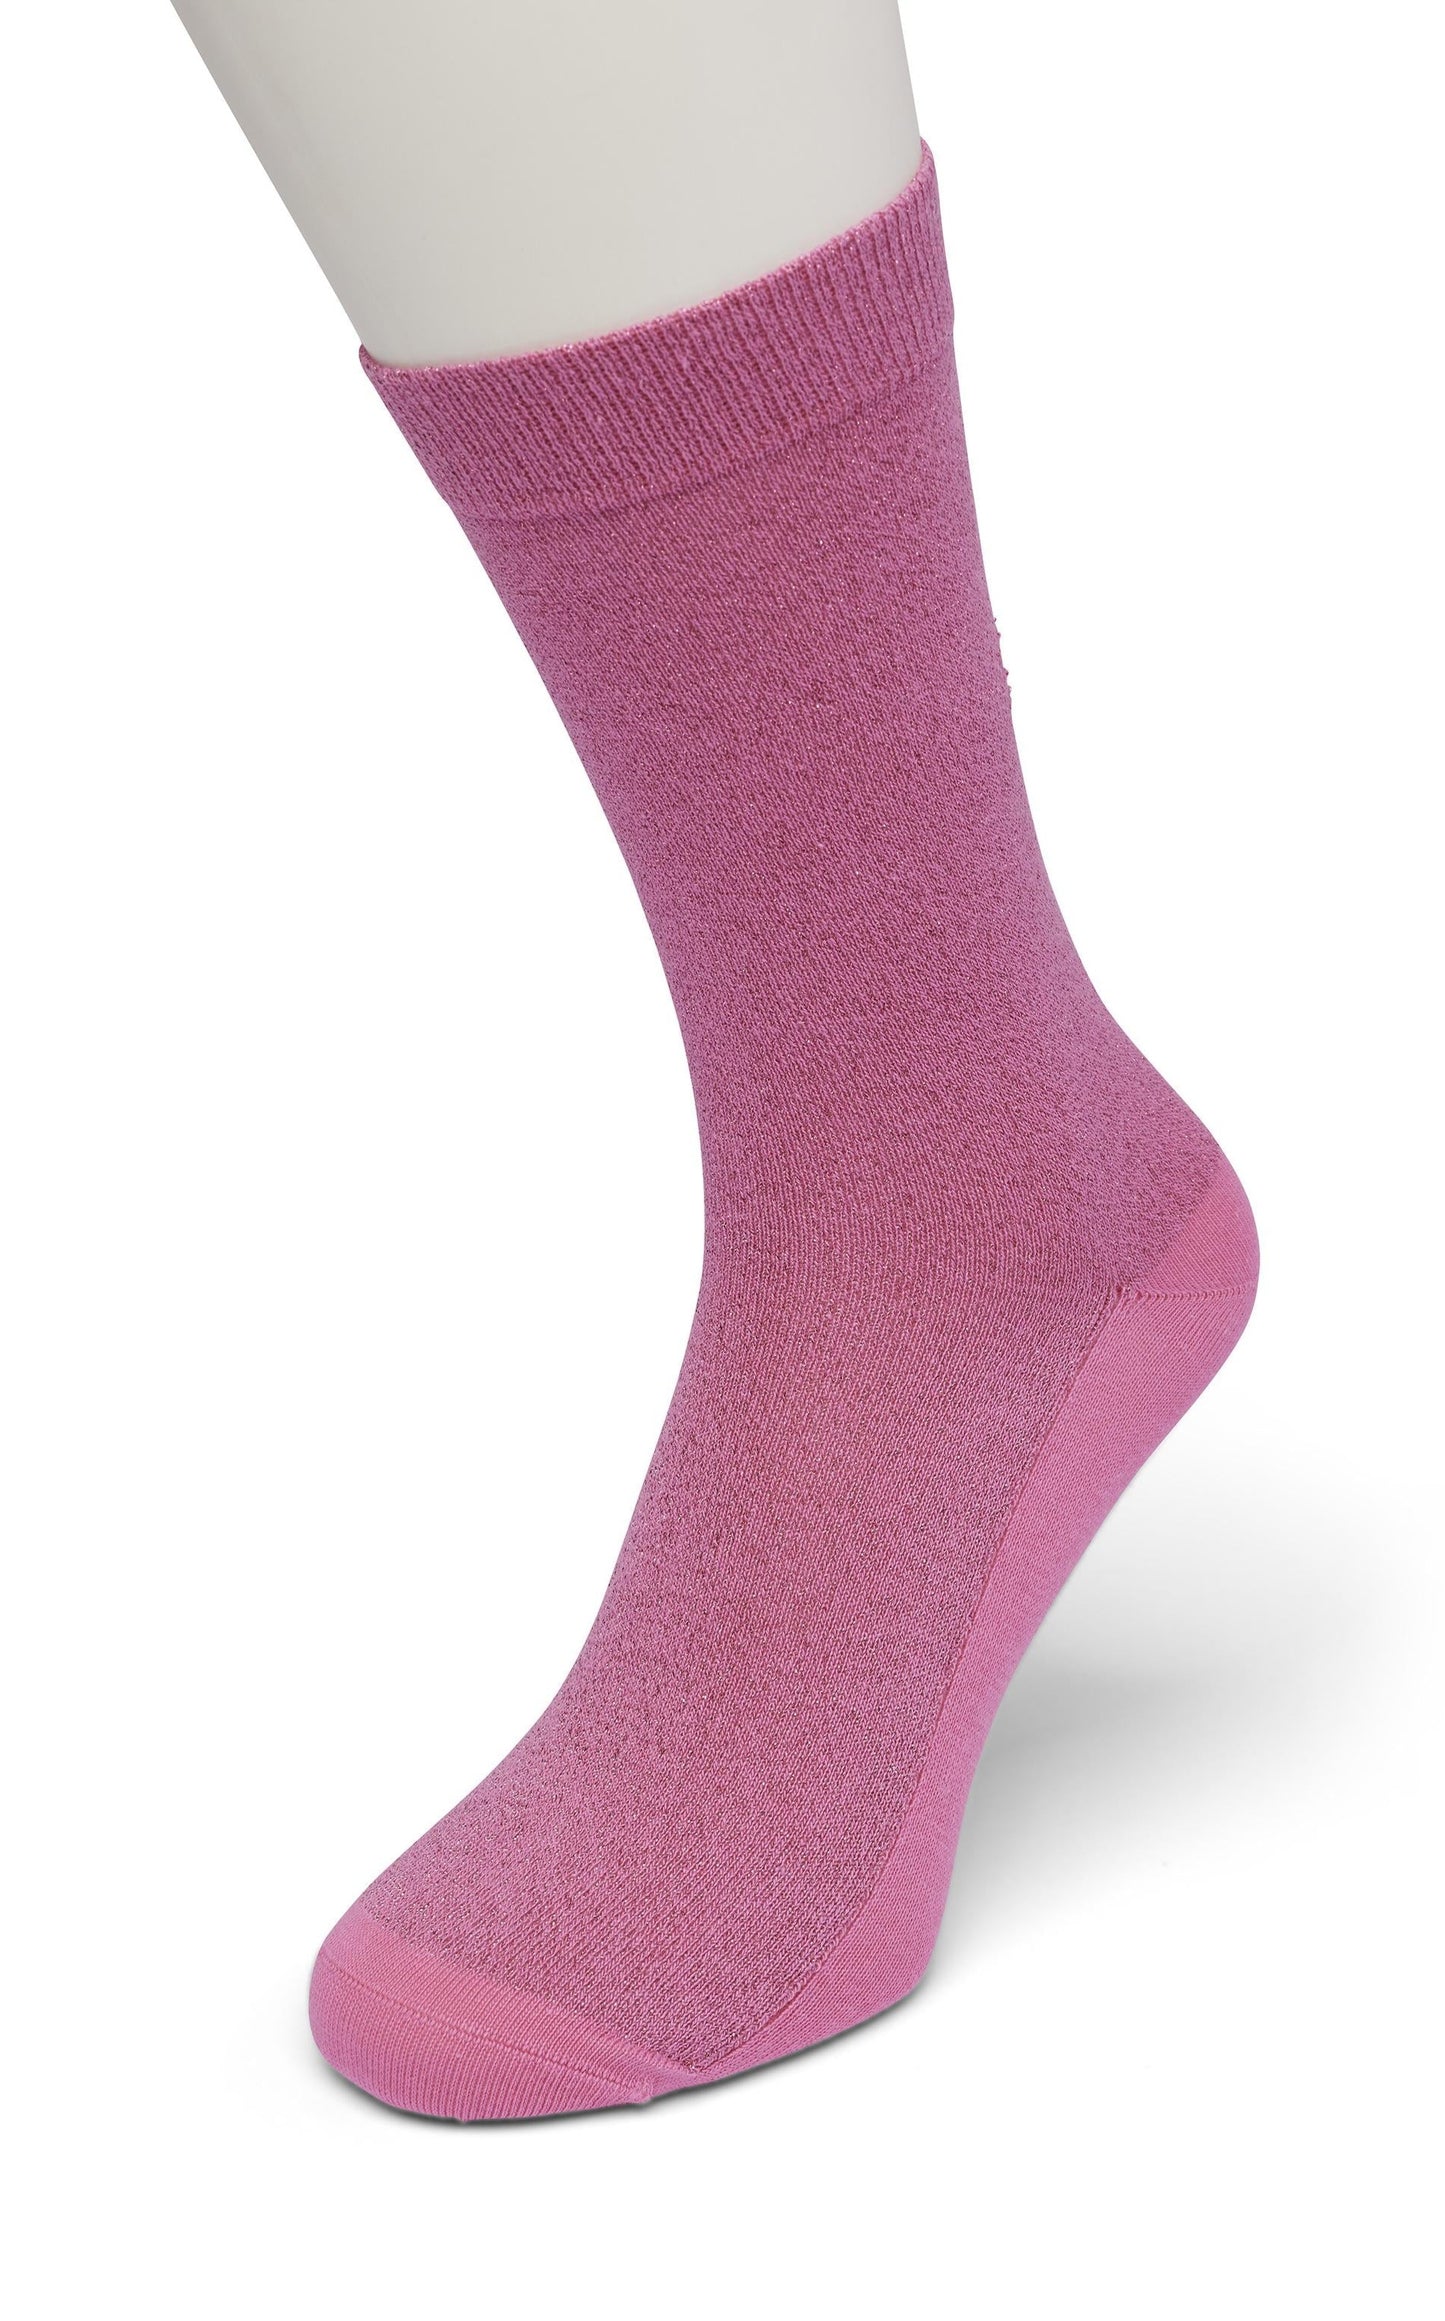 Bonnie Doon BP051138 Cotton Sparkle Socks - pink socks with sparkly glitter lam̩ lurex